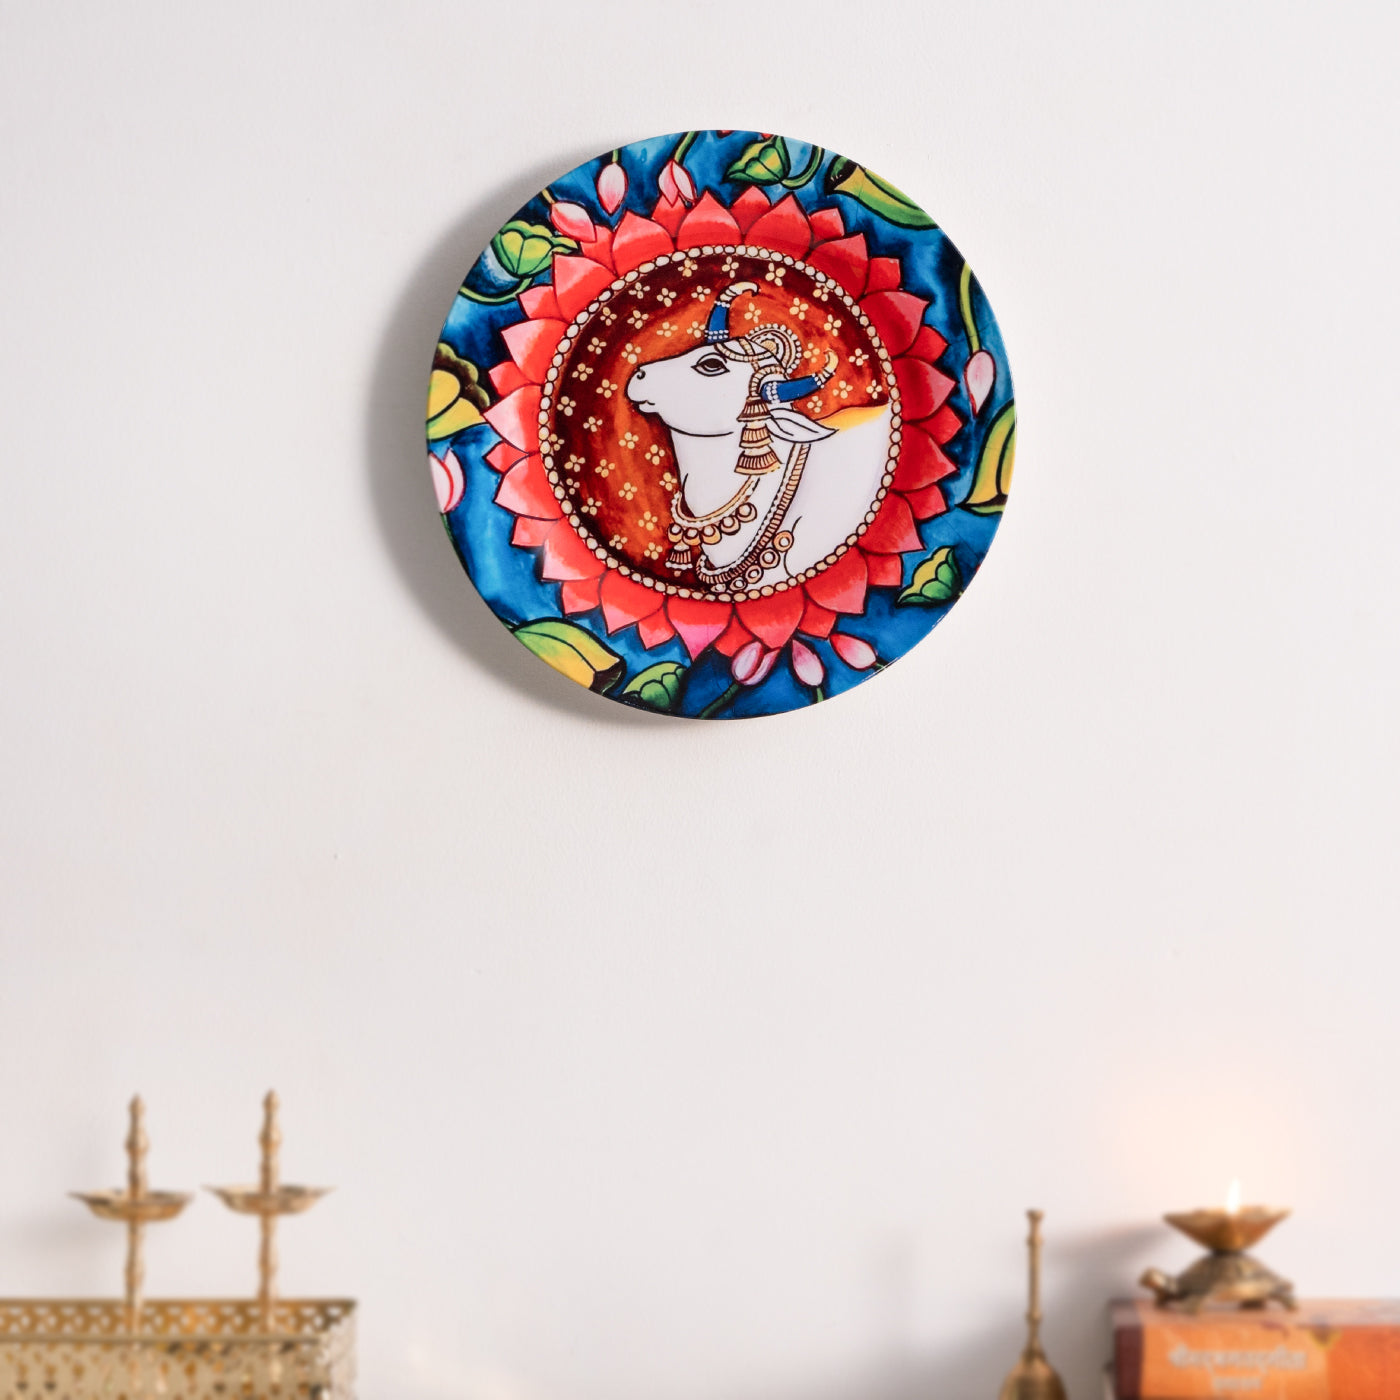 Pichwai Ceramic wall plates decor hanging / tabletop